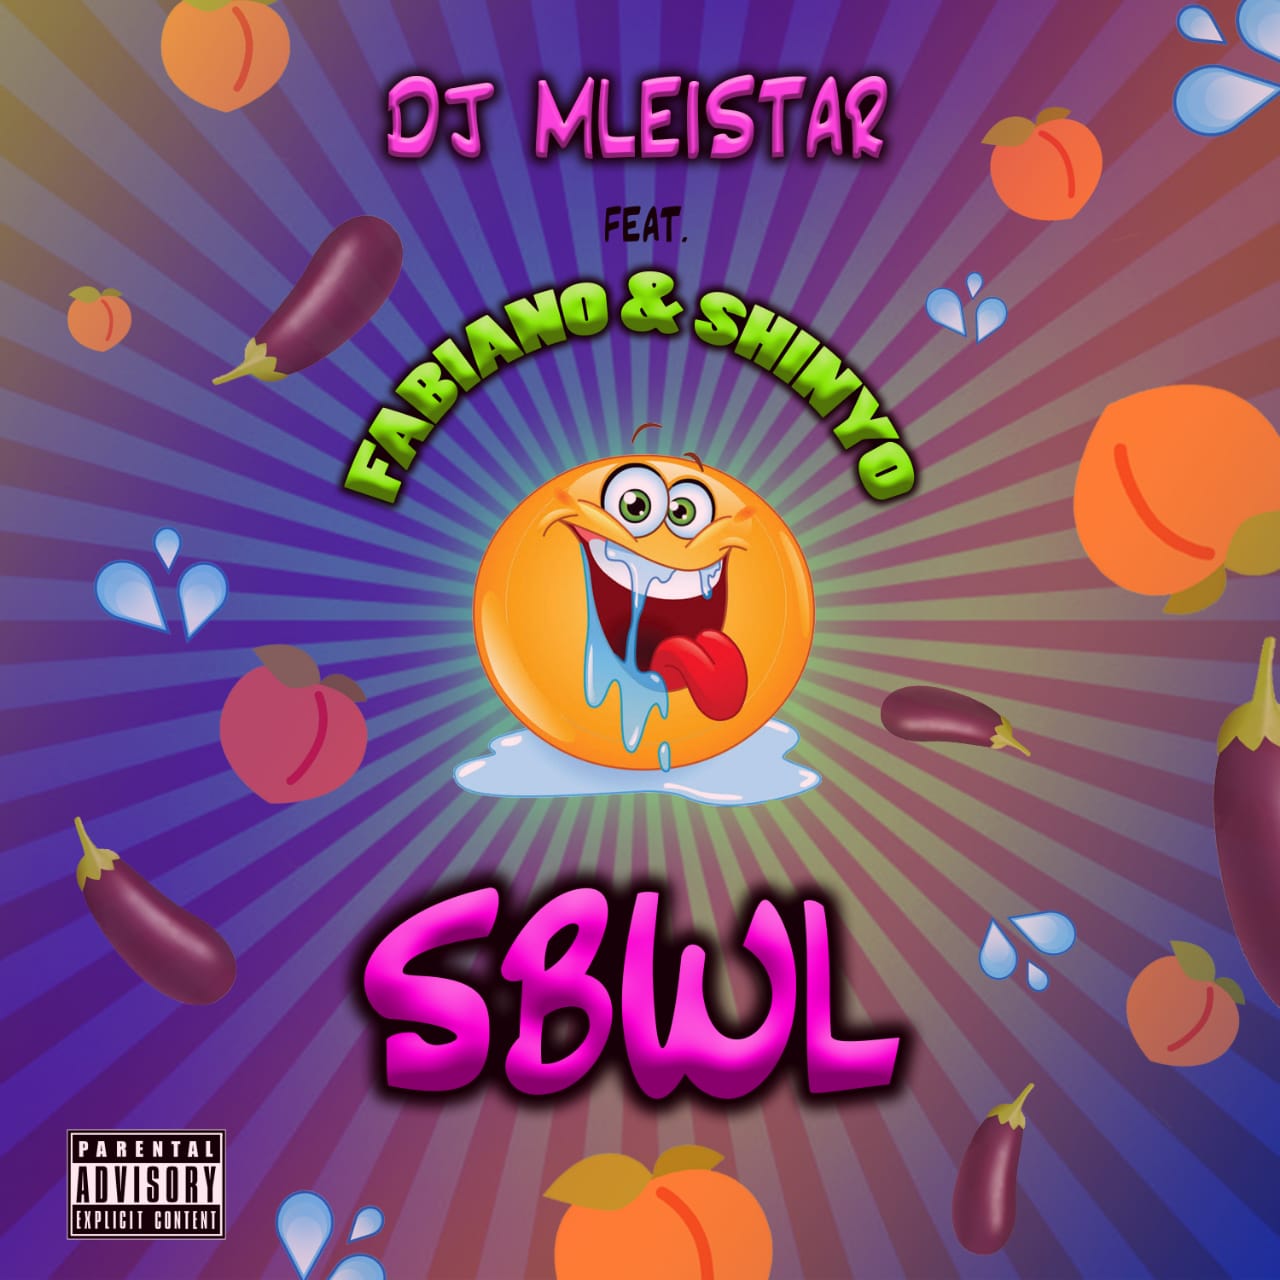 DJ Mleistar - SBWL (feat. Fabiano Isdirane & Shinyo)